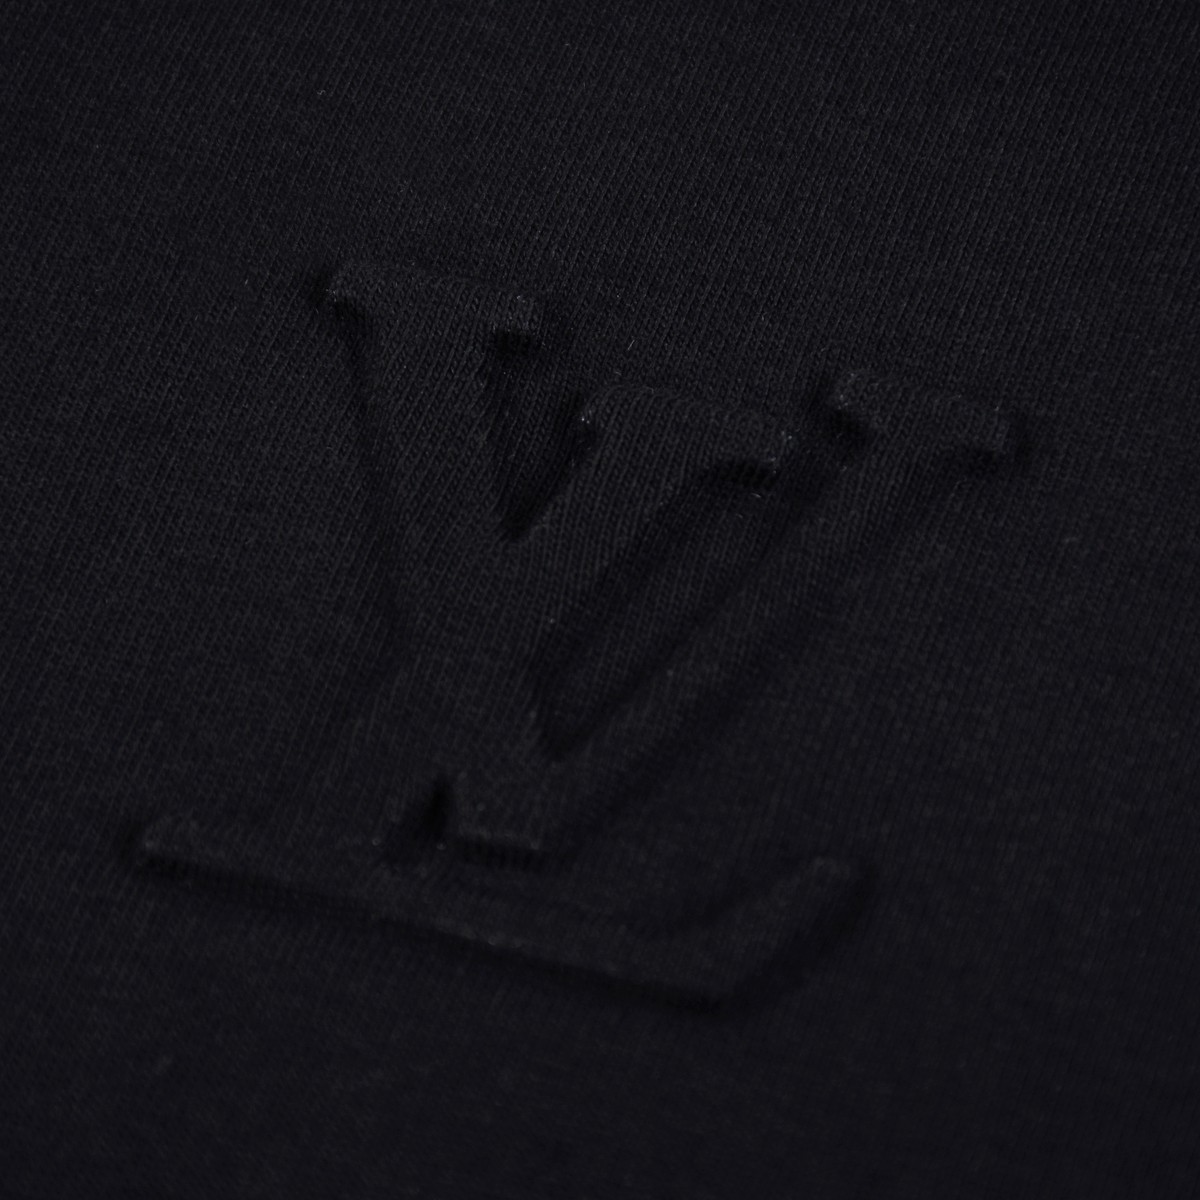 Louis Vuitton Cotton T-Shirt  - DesignerGu